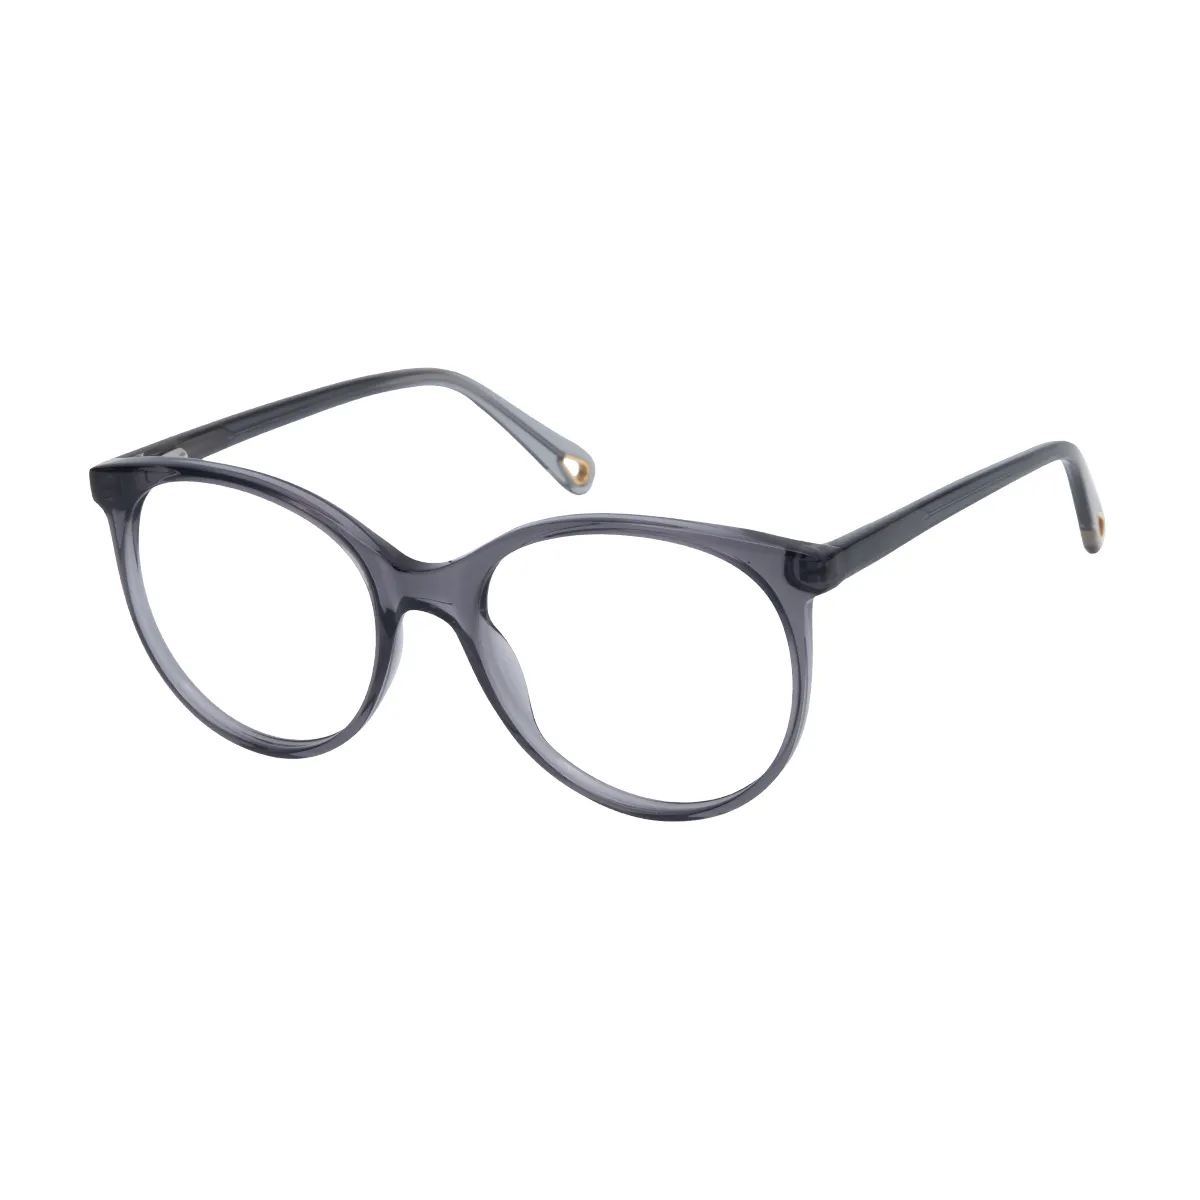 Tania - Round Gray Glasses for Women